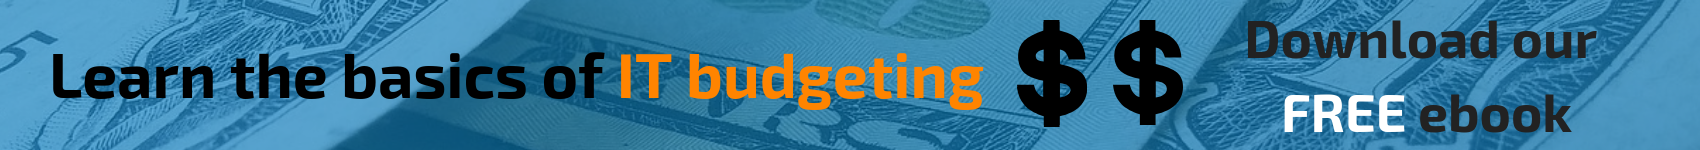 Budget Ebook banner.png